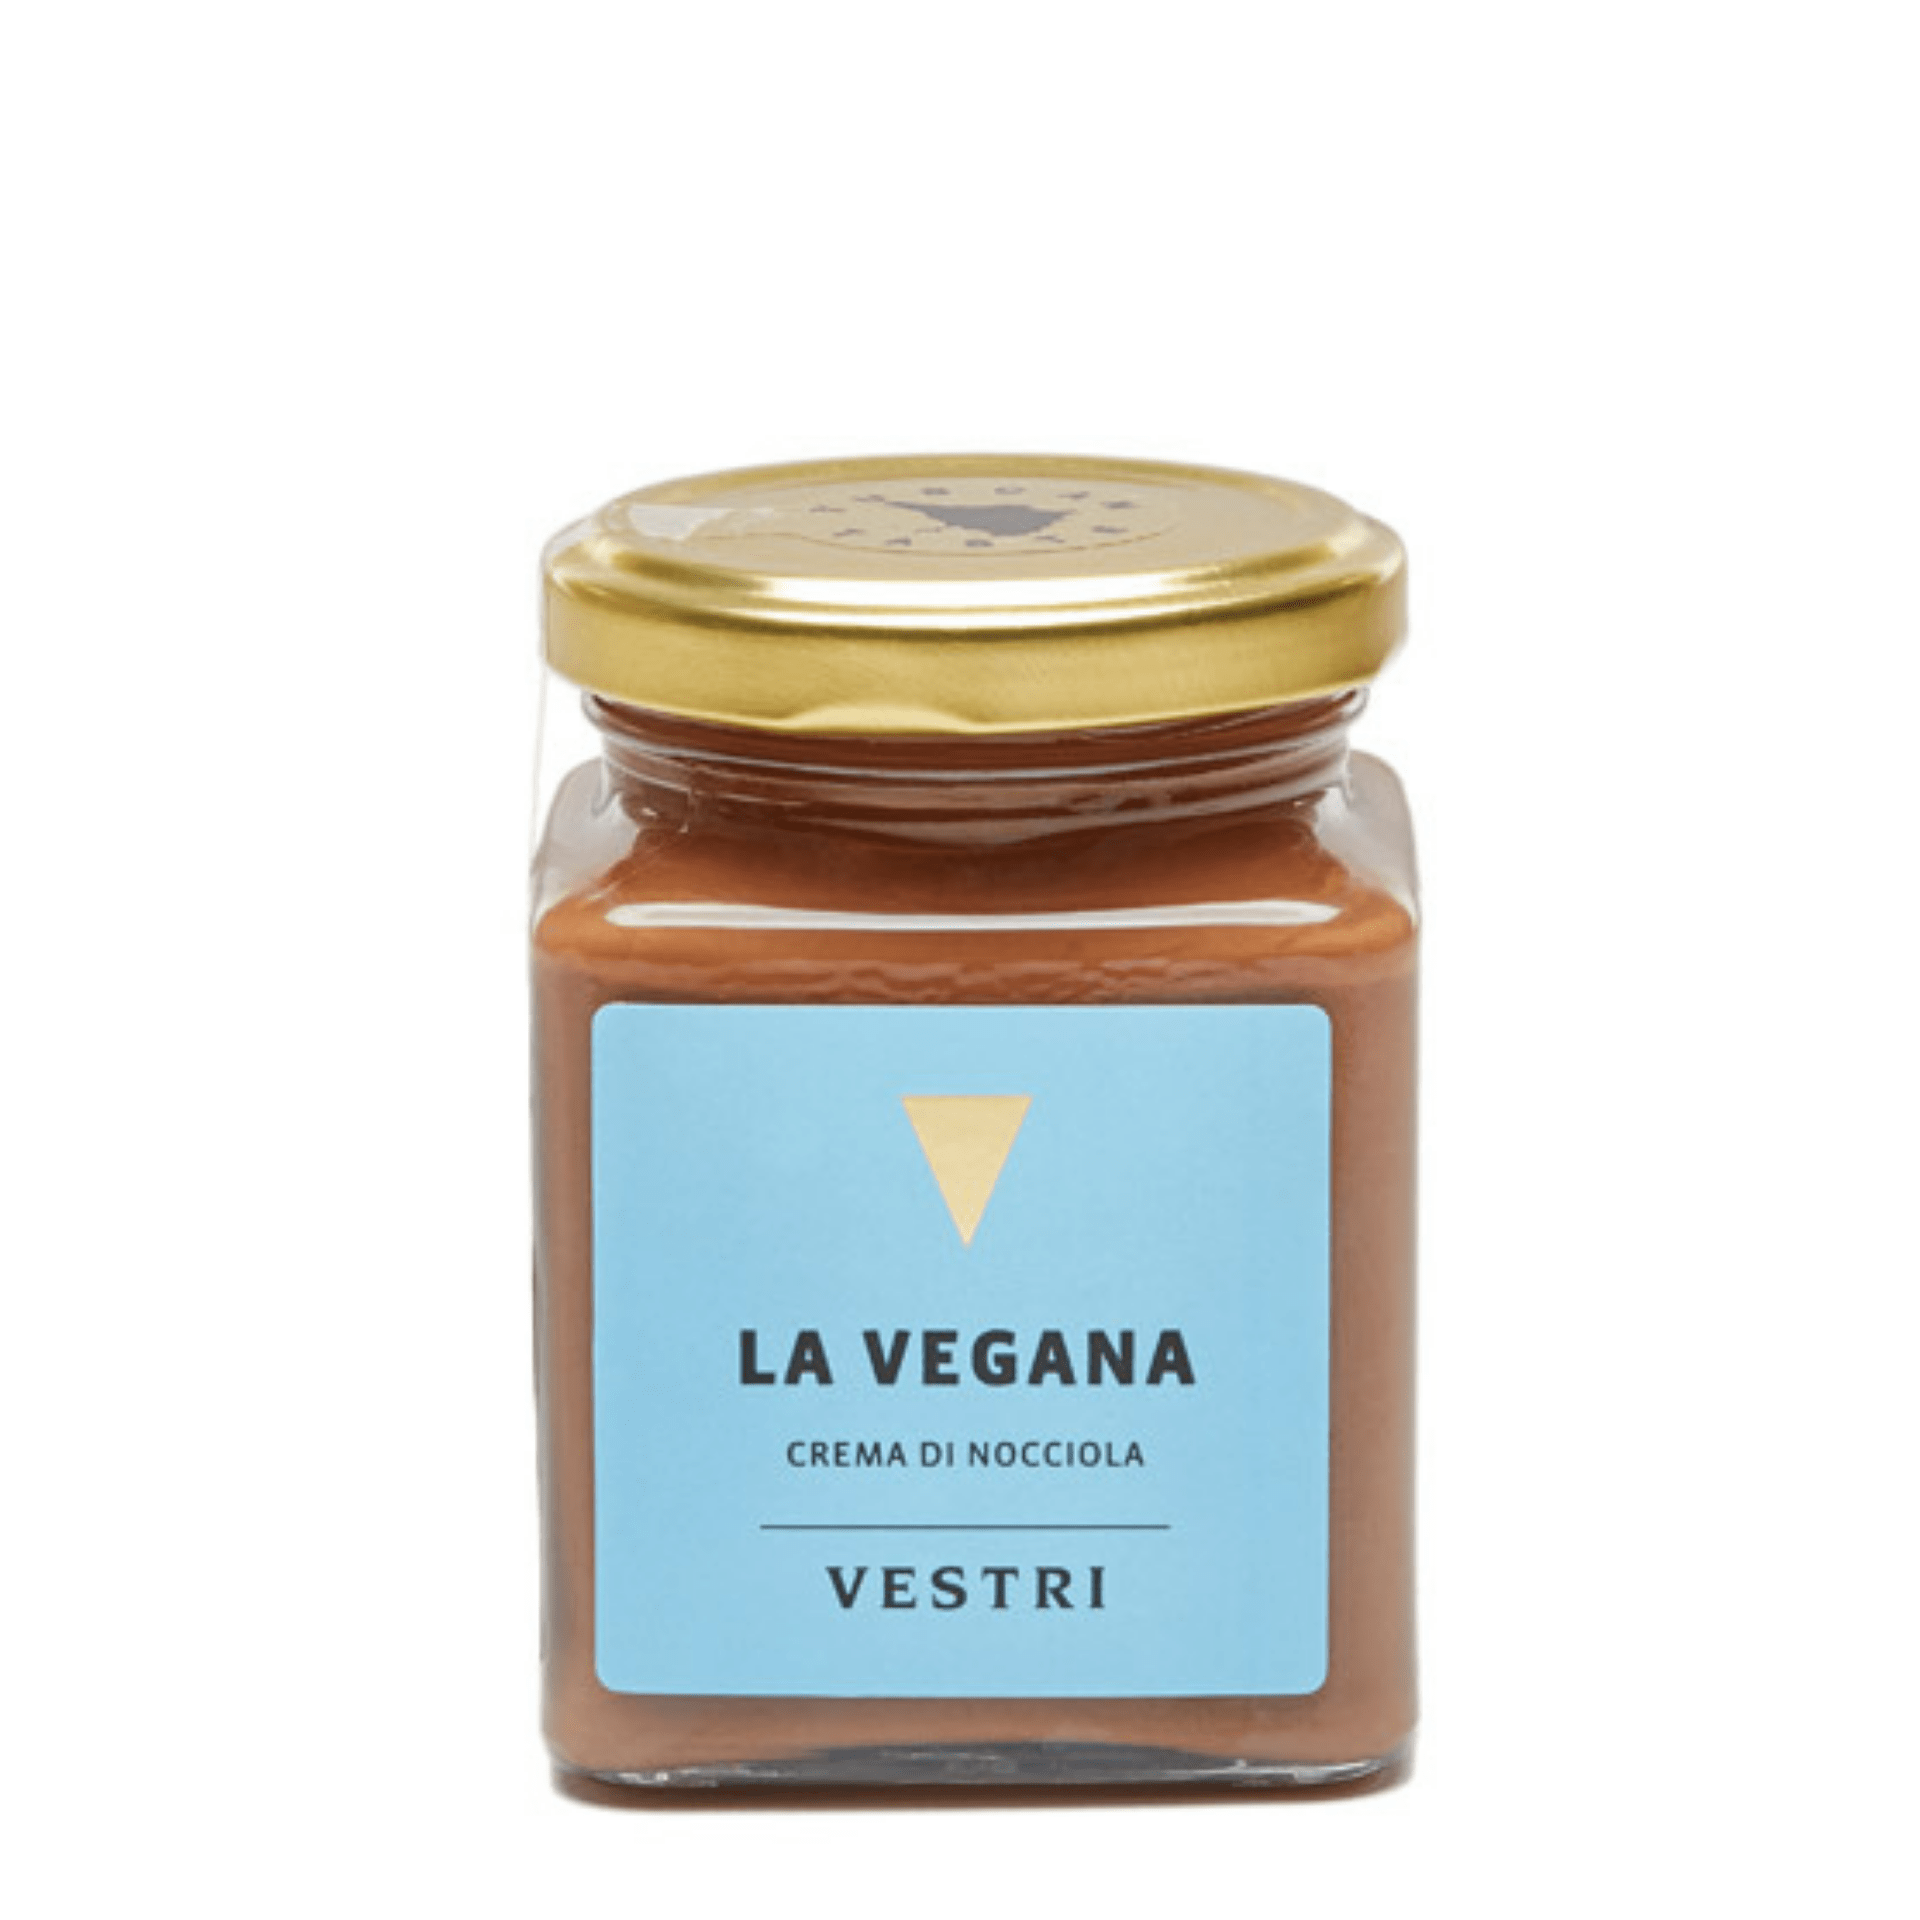 Tasty Ribbon Vegan Hazelnut Spread "La Vegana"